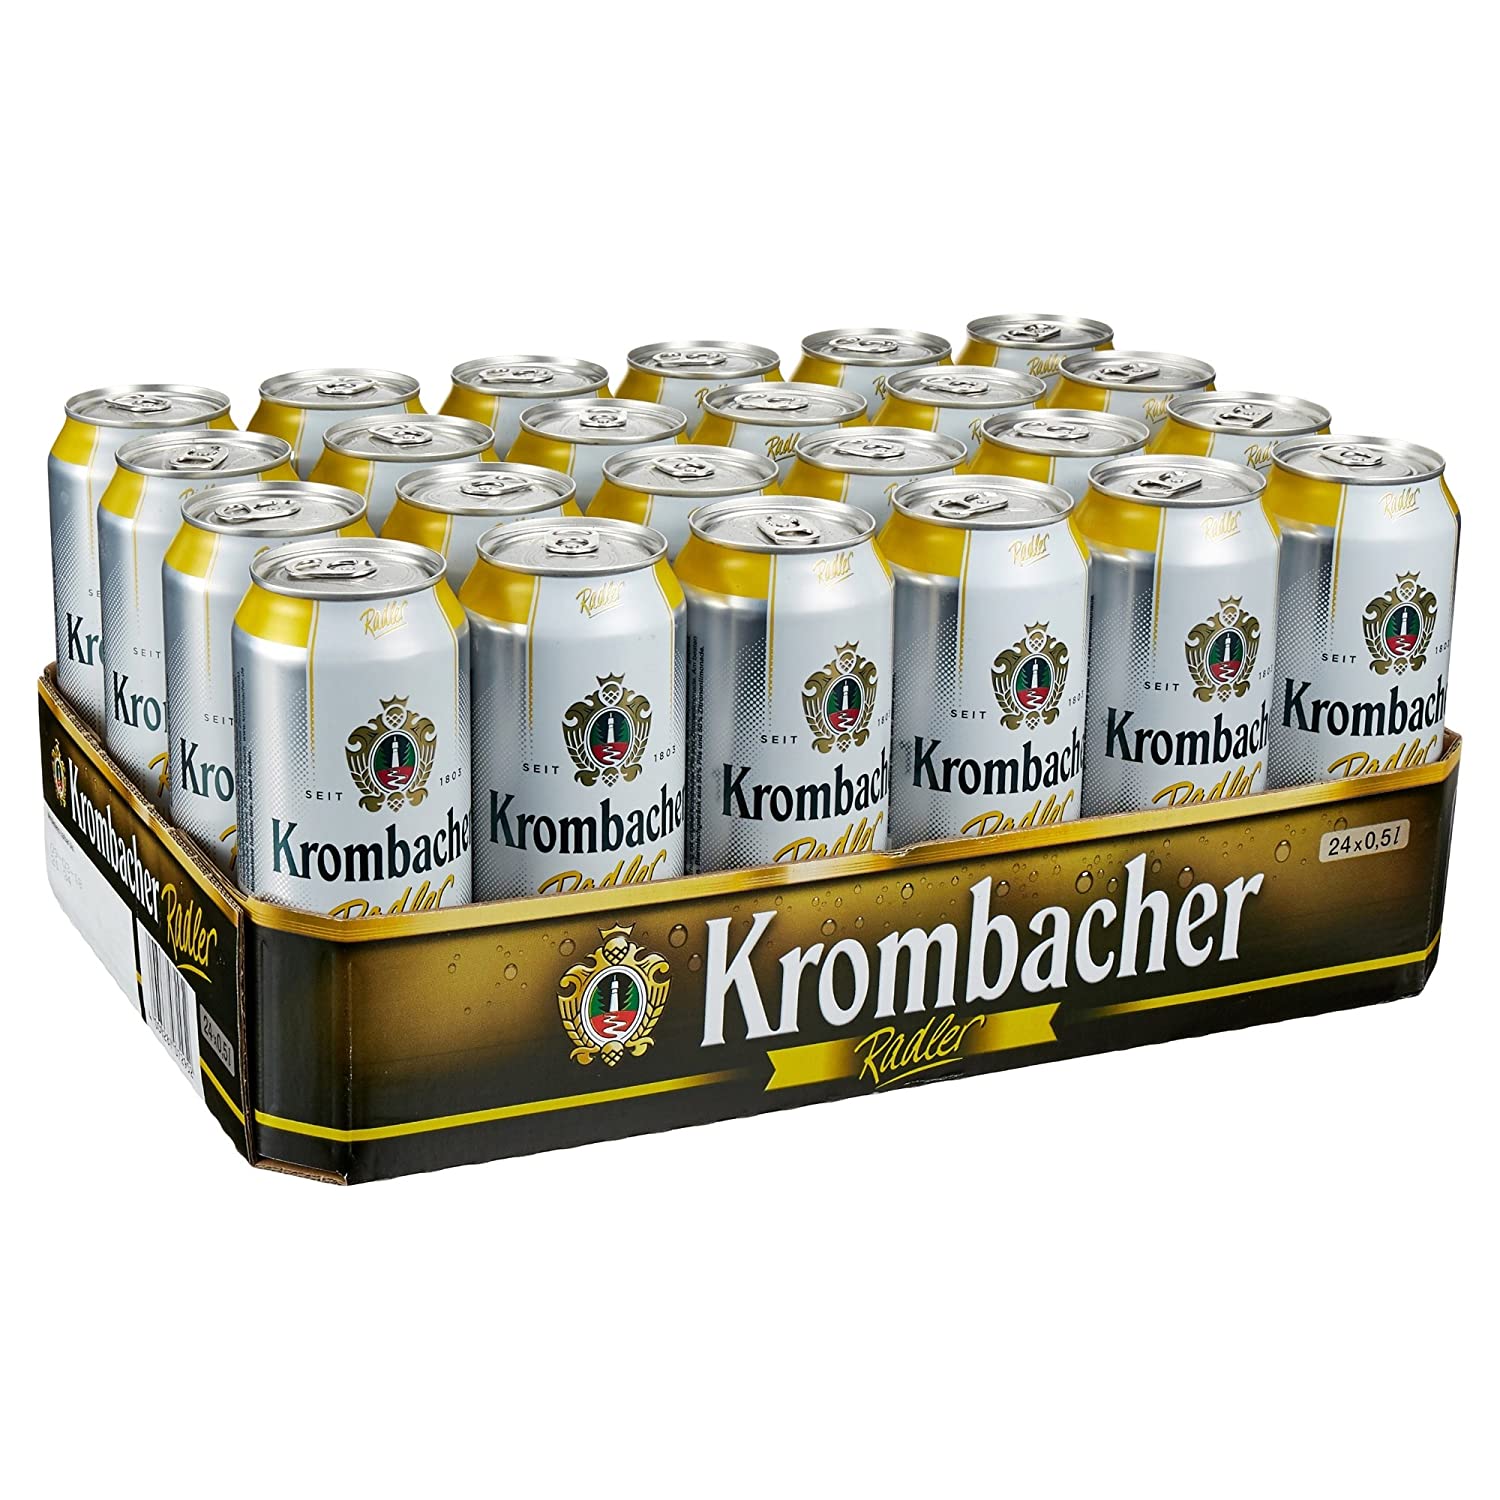 Krombacher Radler 0,5l in der Dose mit 2,5% Vol.